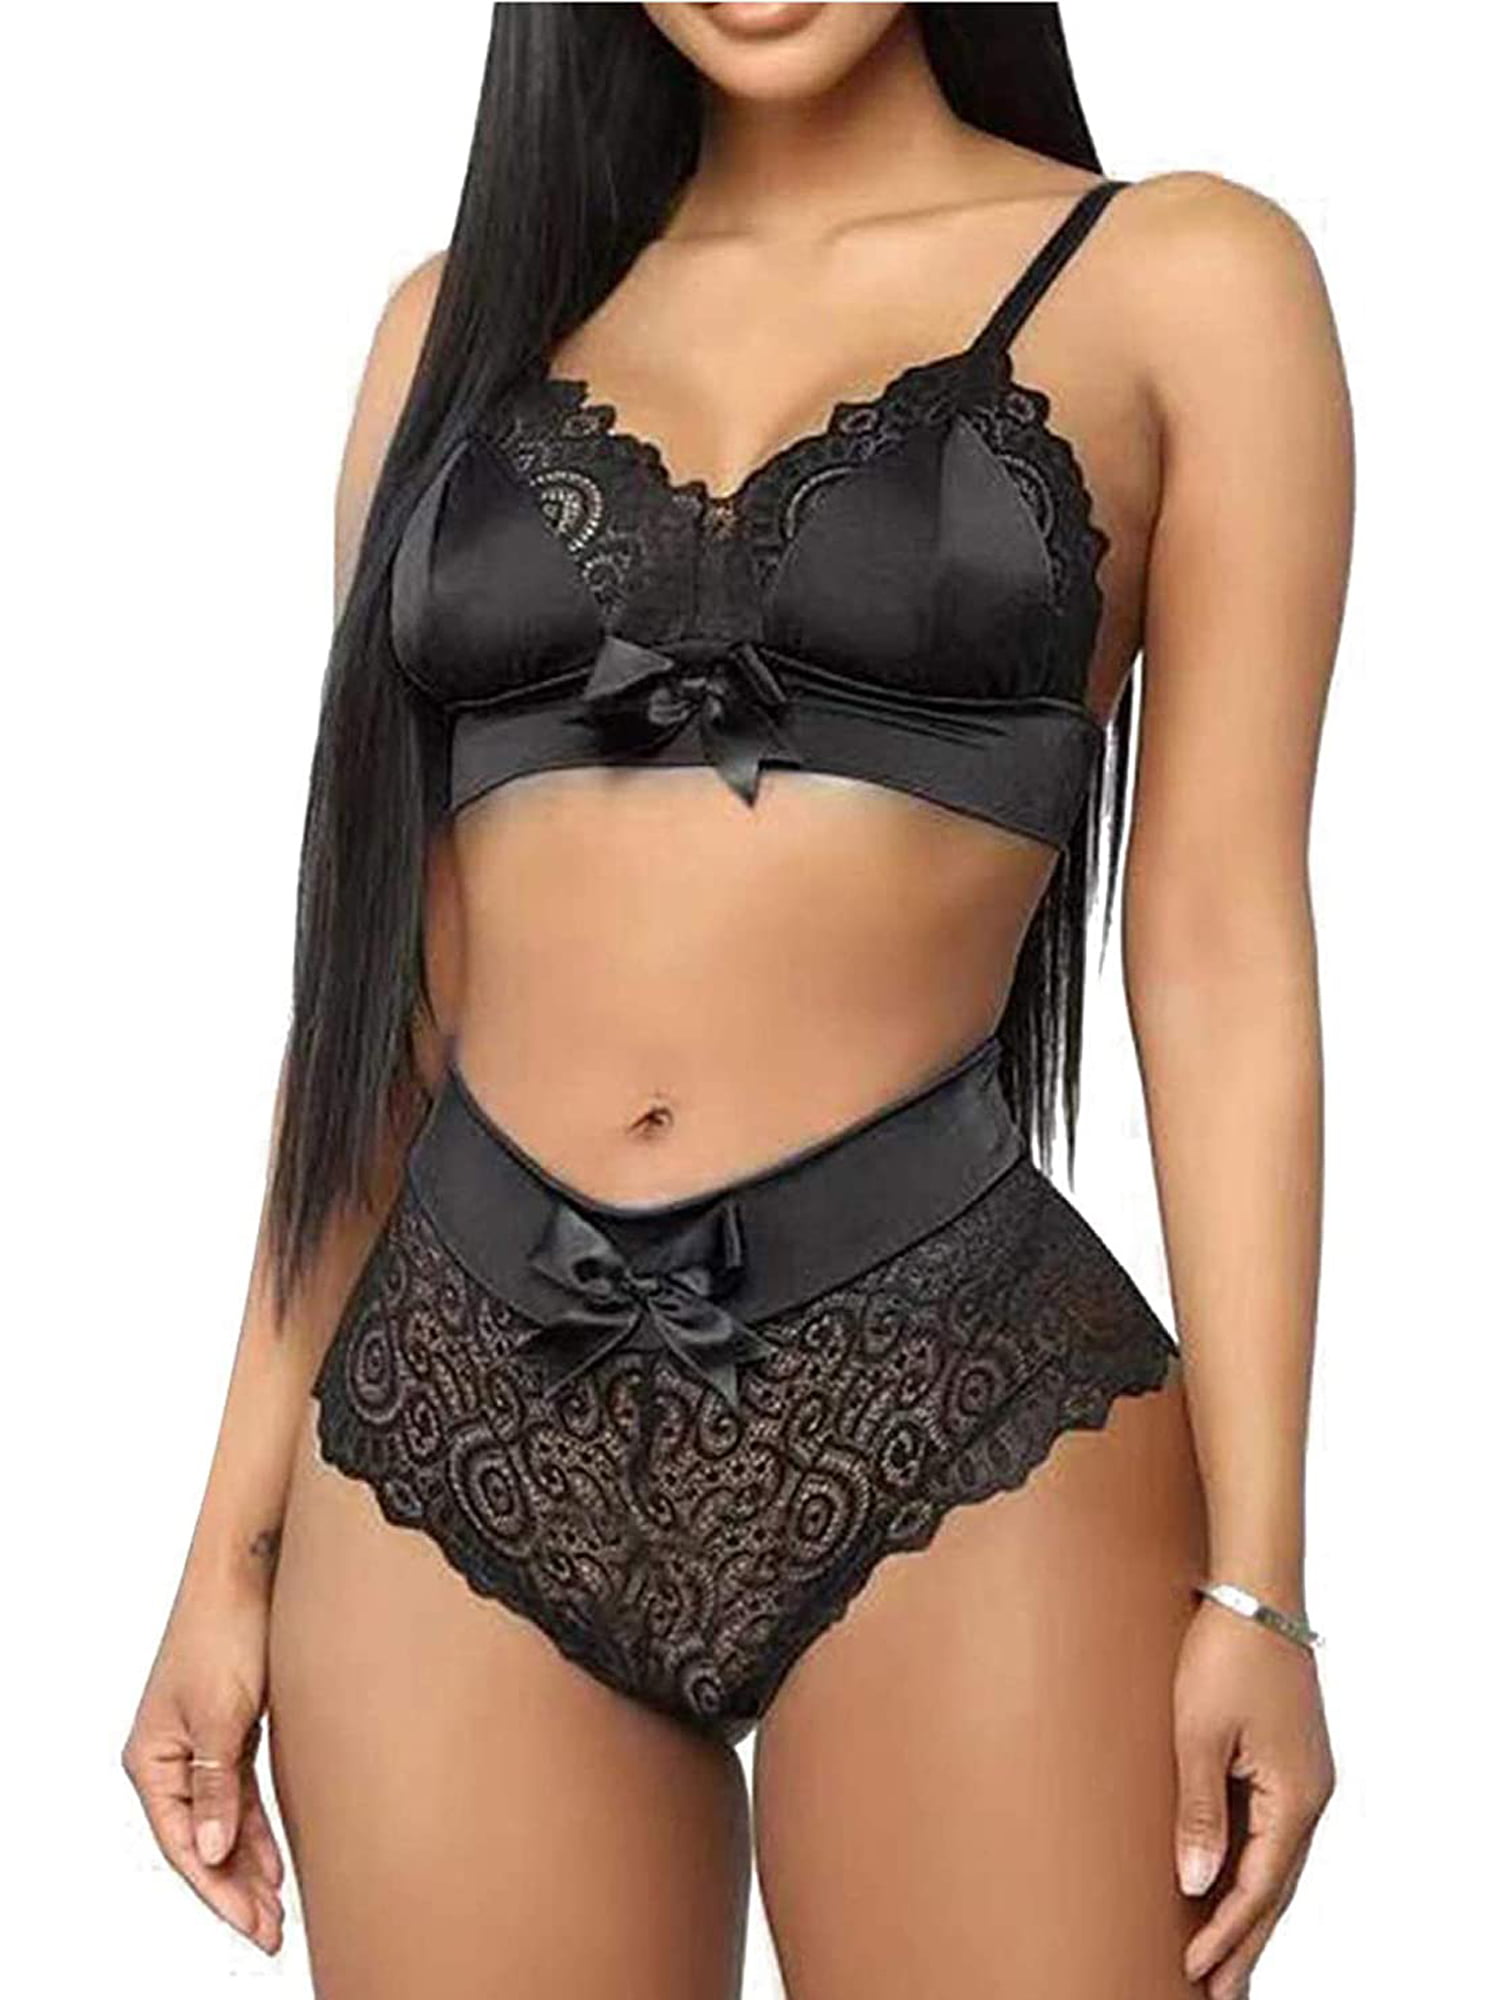 N-Gal Women's Sheer Lace See through Lingerie Underwear Lace Bra G-String  Panty Set - Black (S)